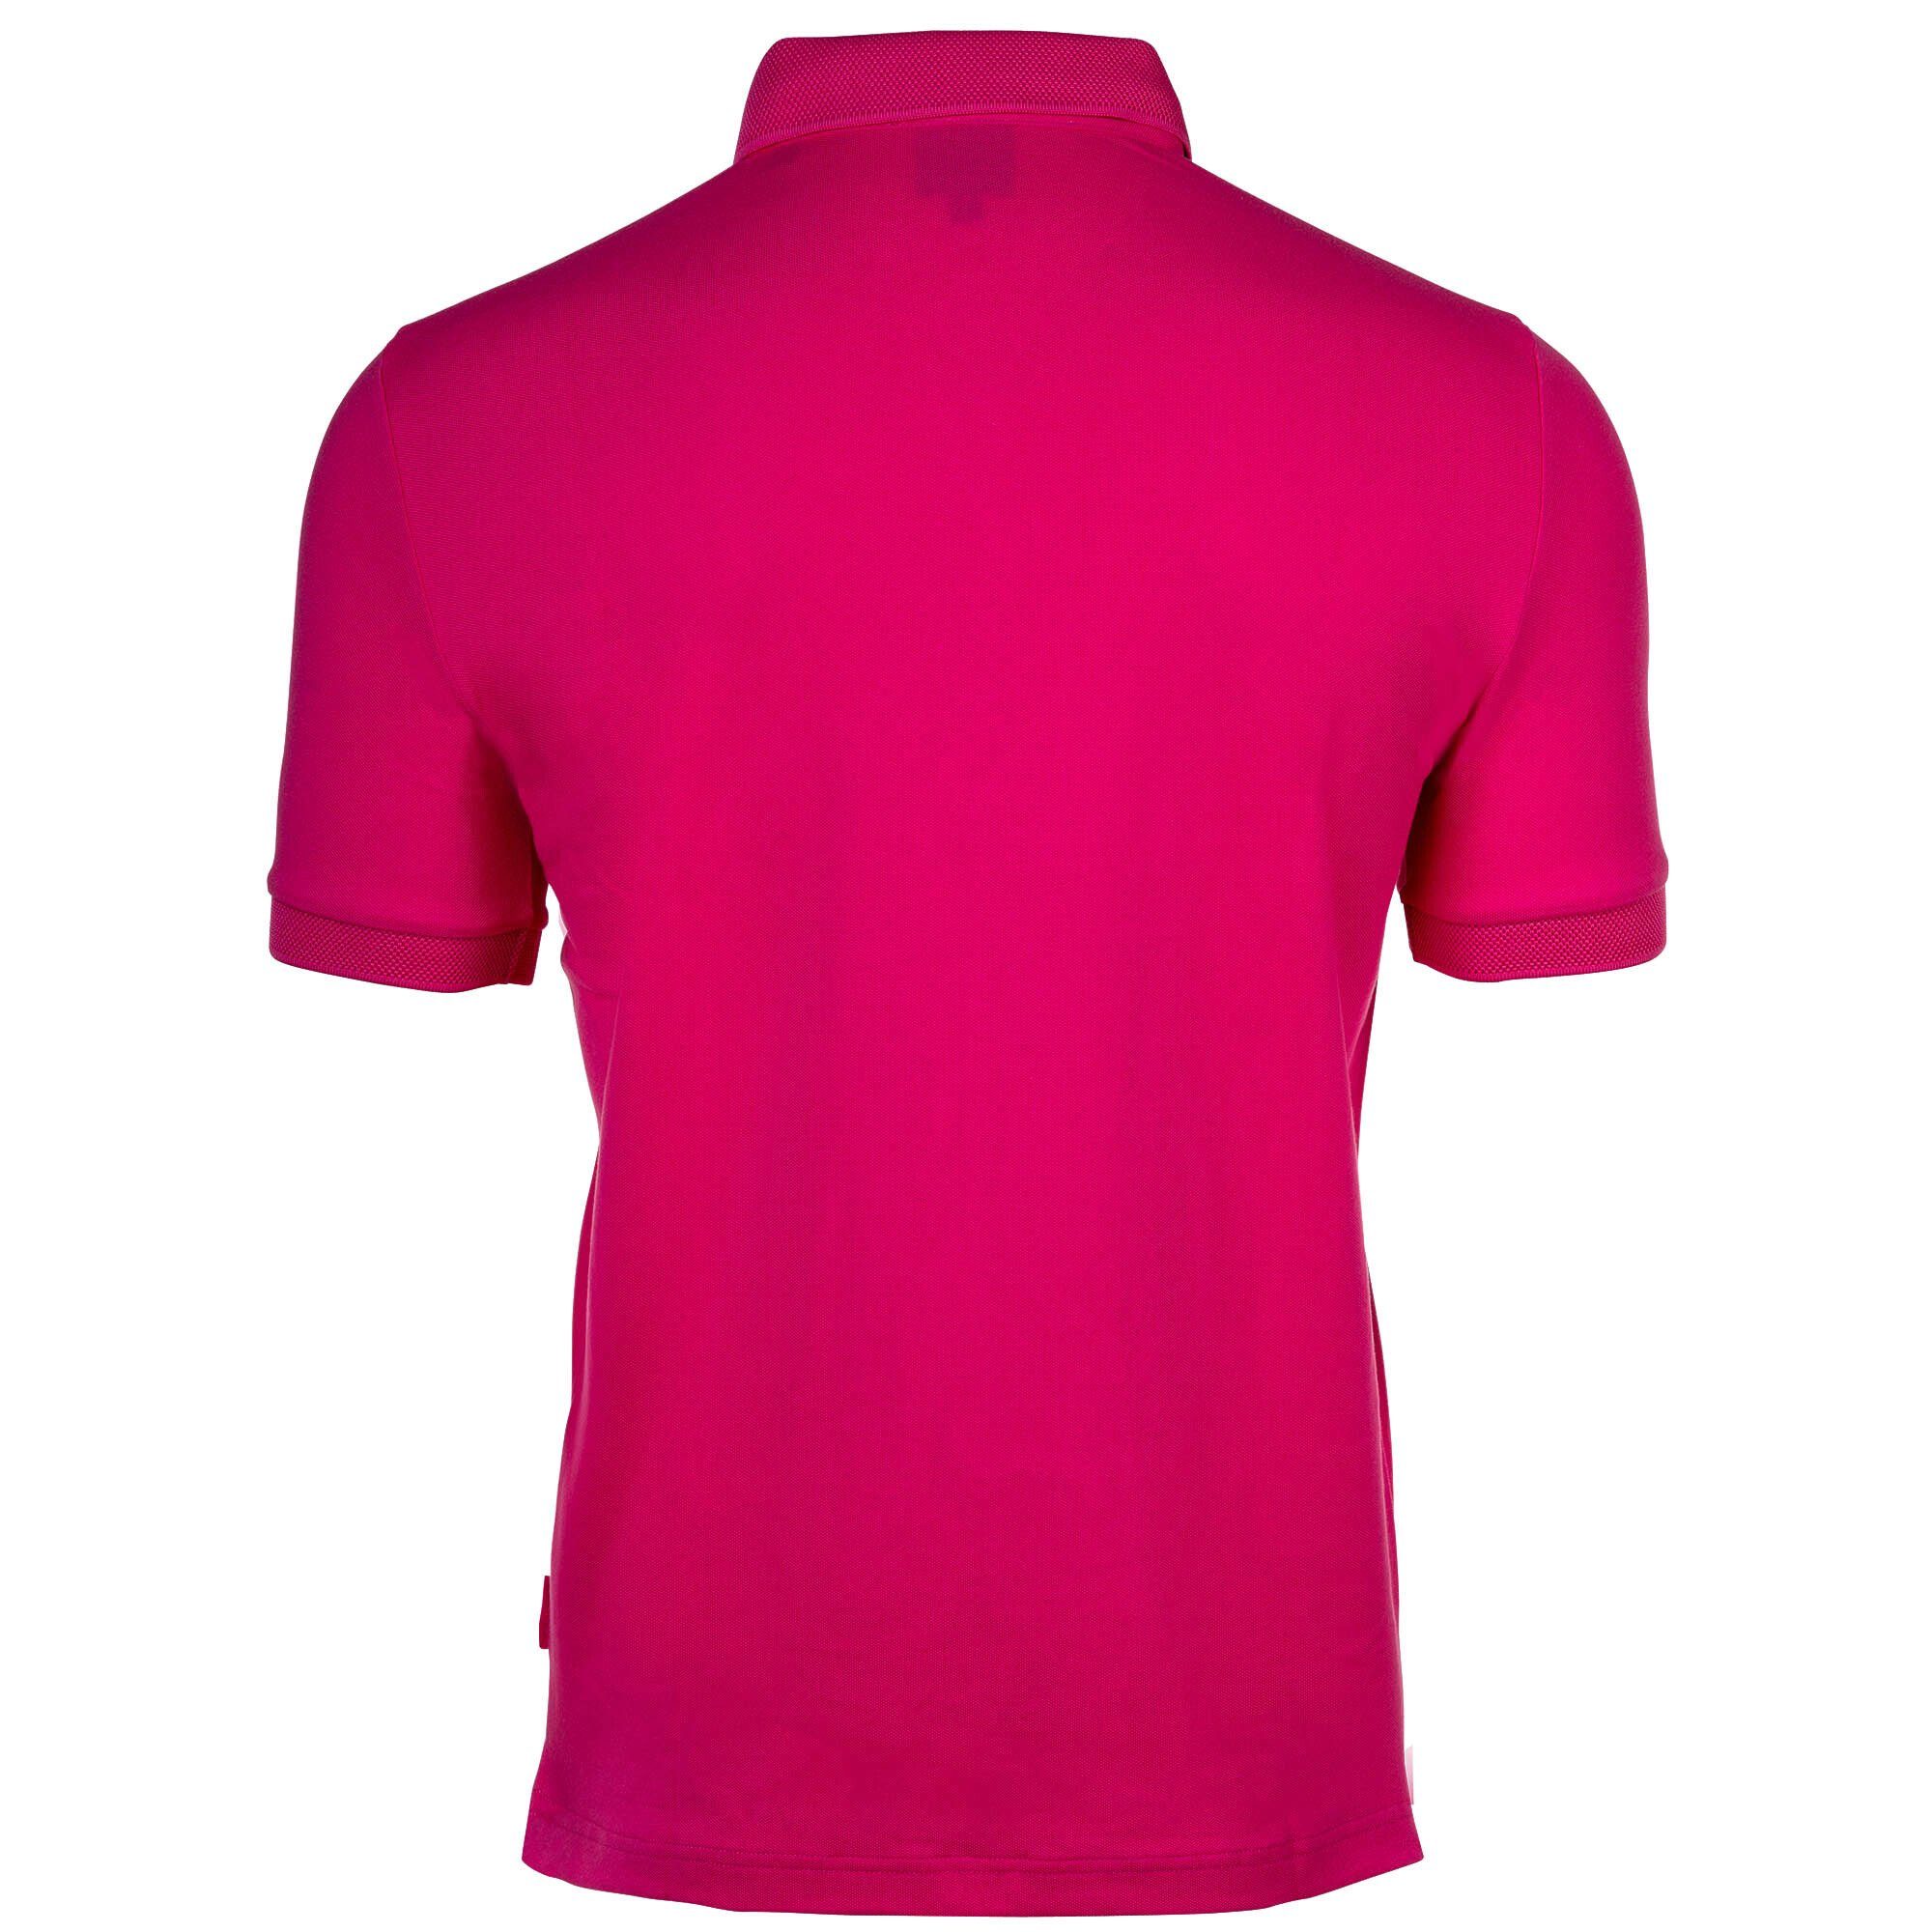 fit, Poloshirt Herren Cotton - Poloshirt ARMANI Slim einfarbig, Pink EXCHANGE